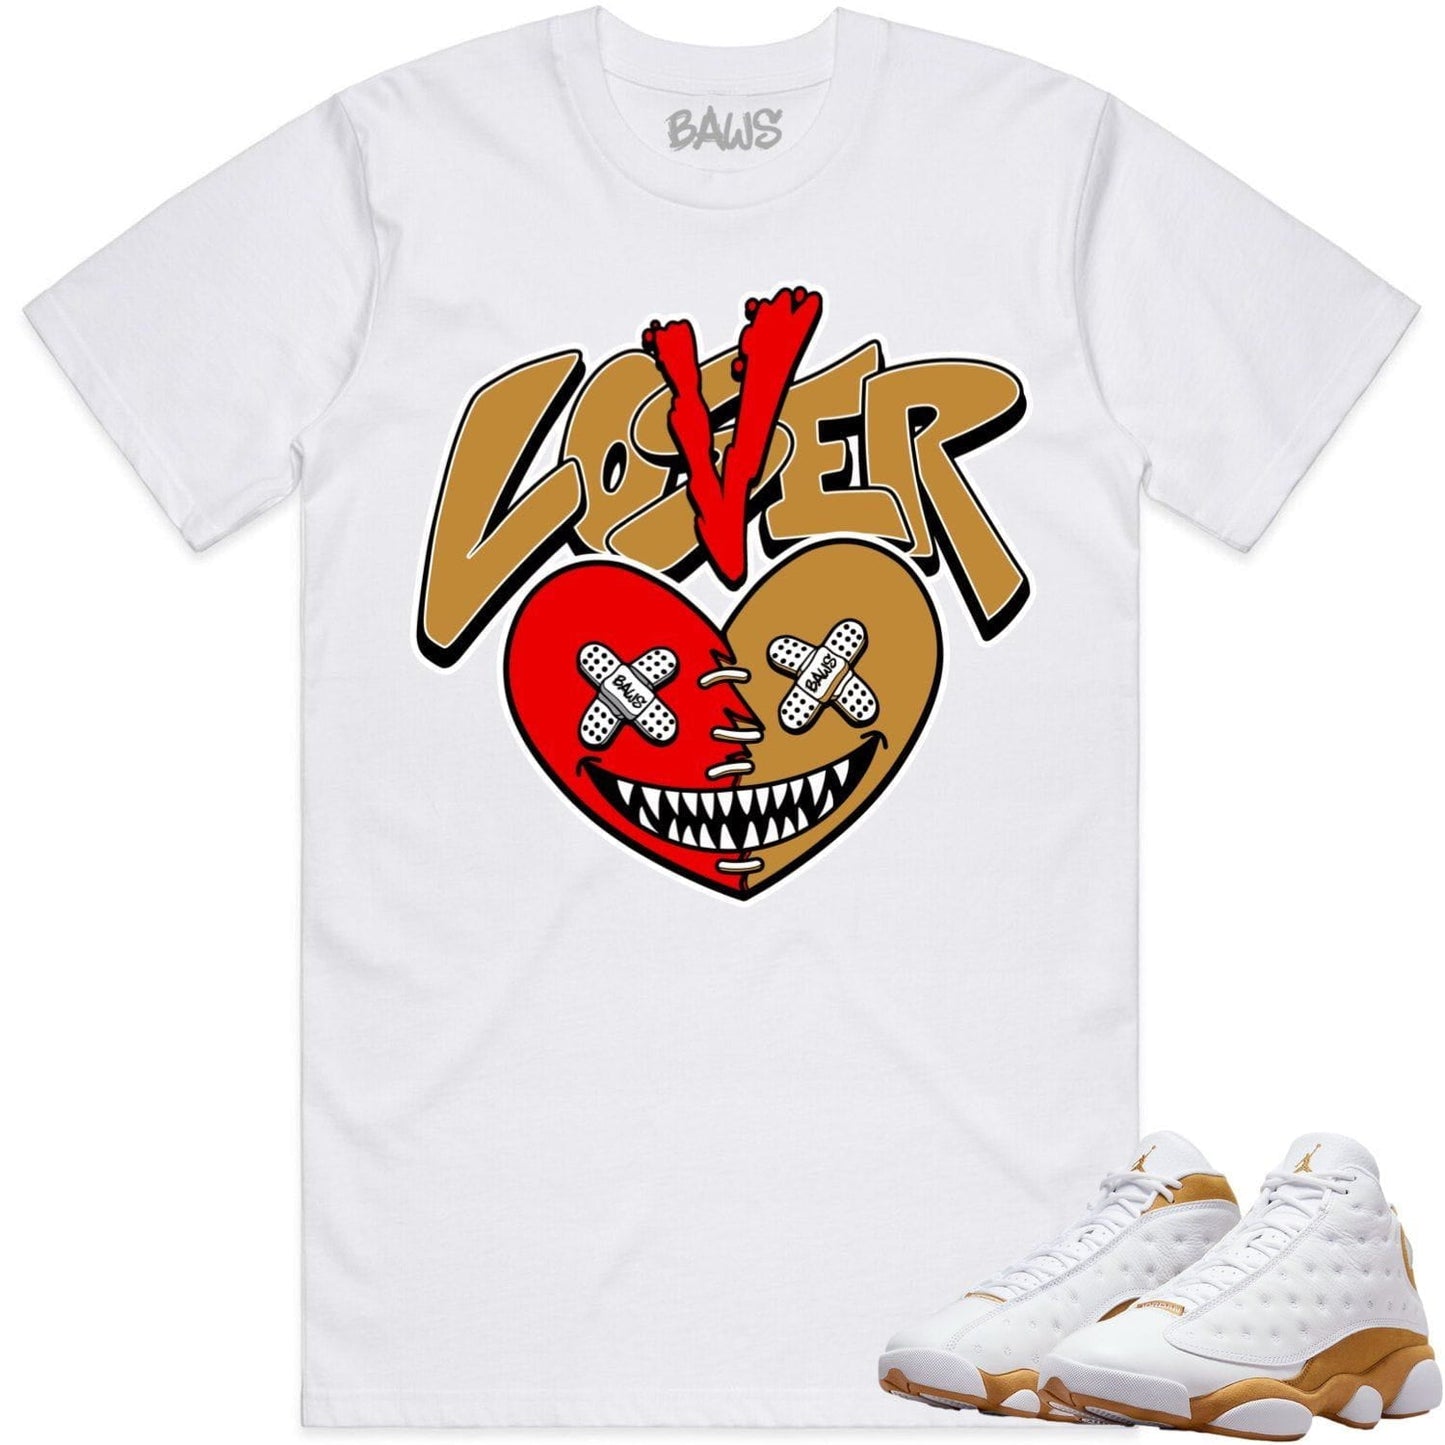 Wheat 13s Shirt - Jordan Retro 13 Wheat Shirts - No Love Baws